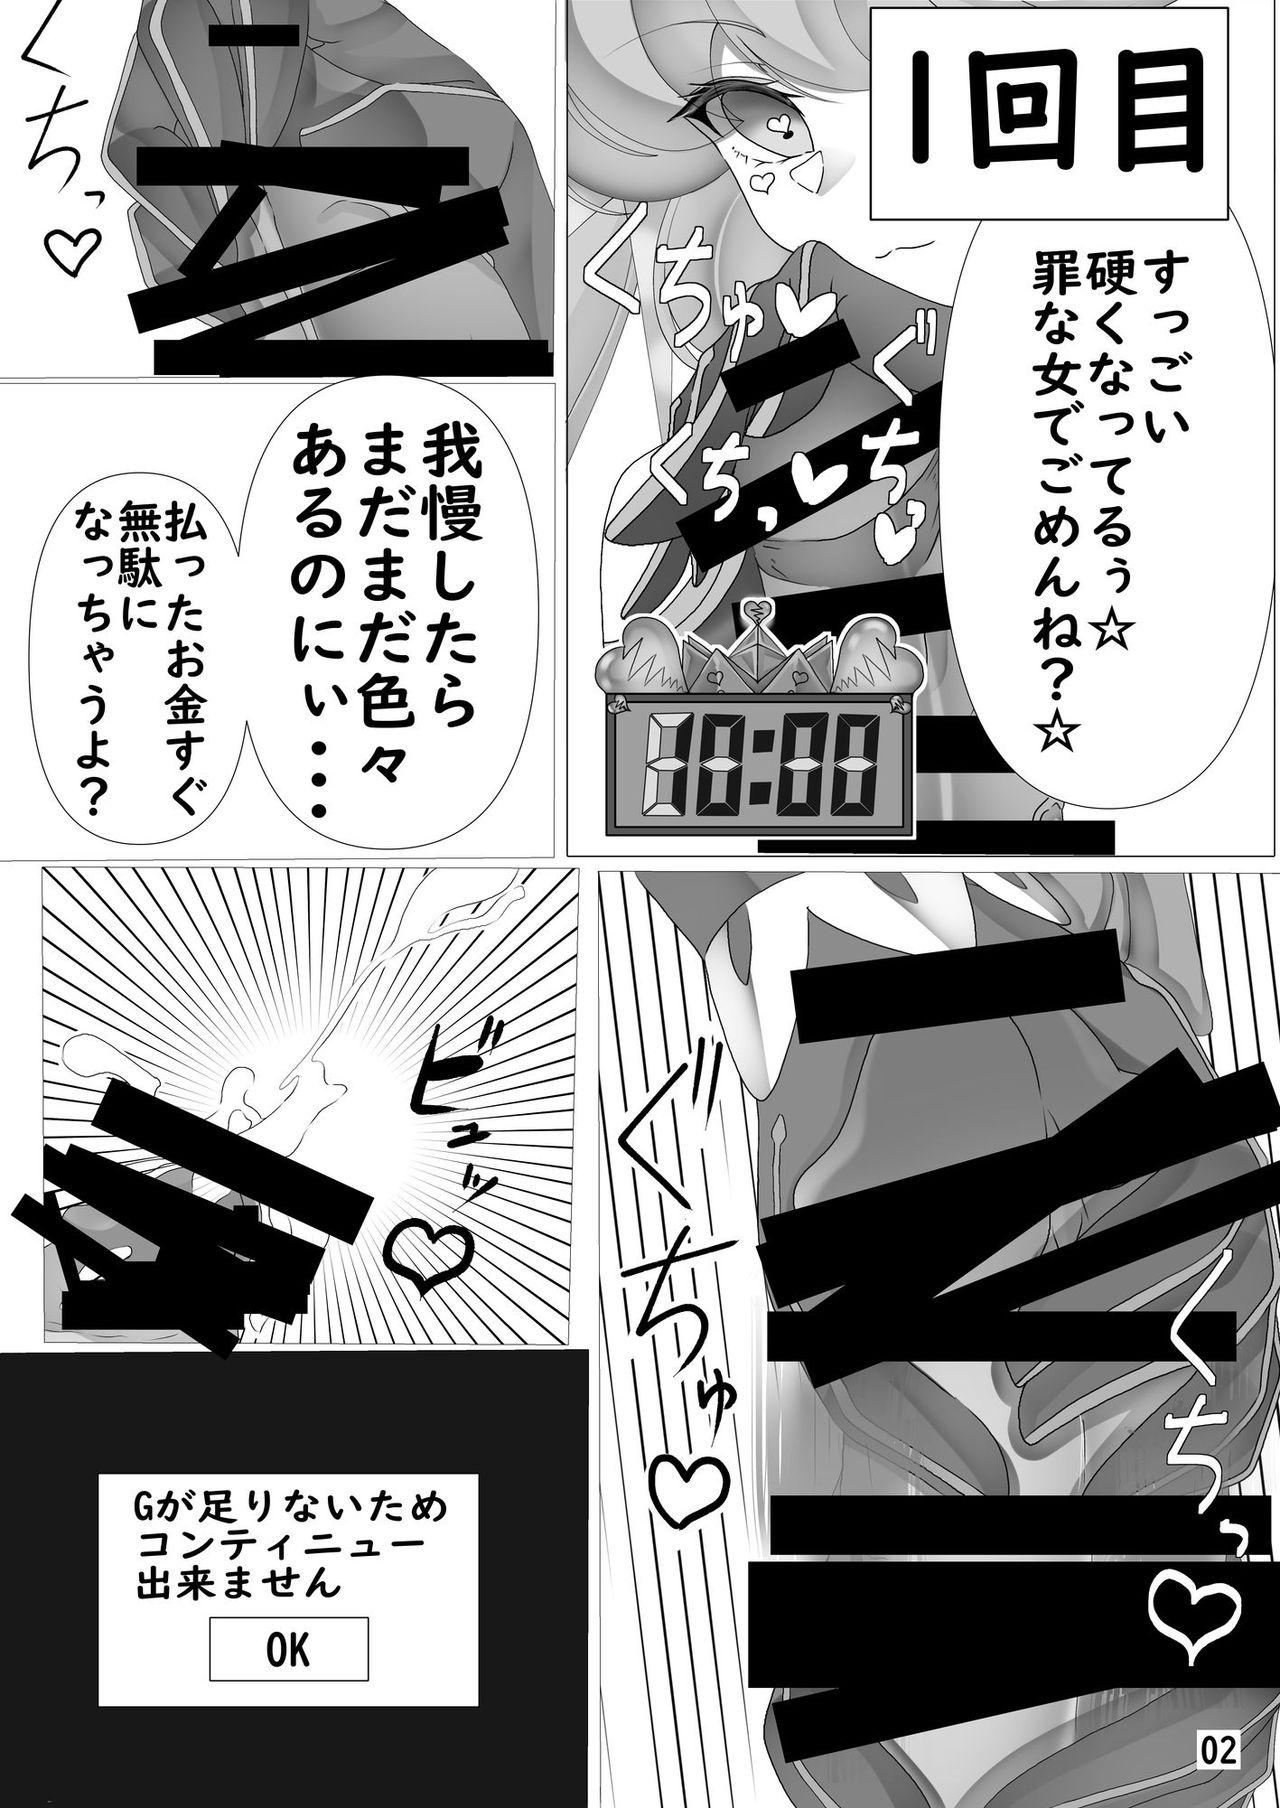 Parody Gaido Takasugi! Saaya Refre - Megido 72 Ohmibod - Page 3